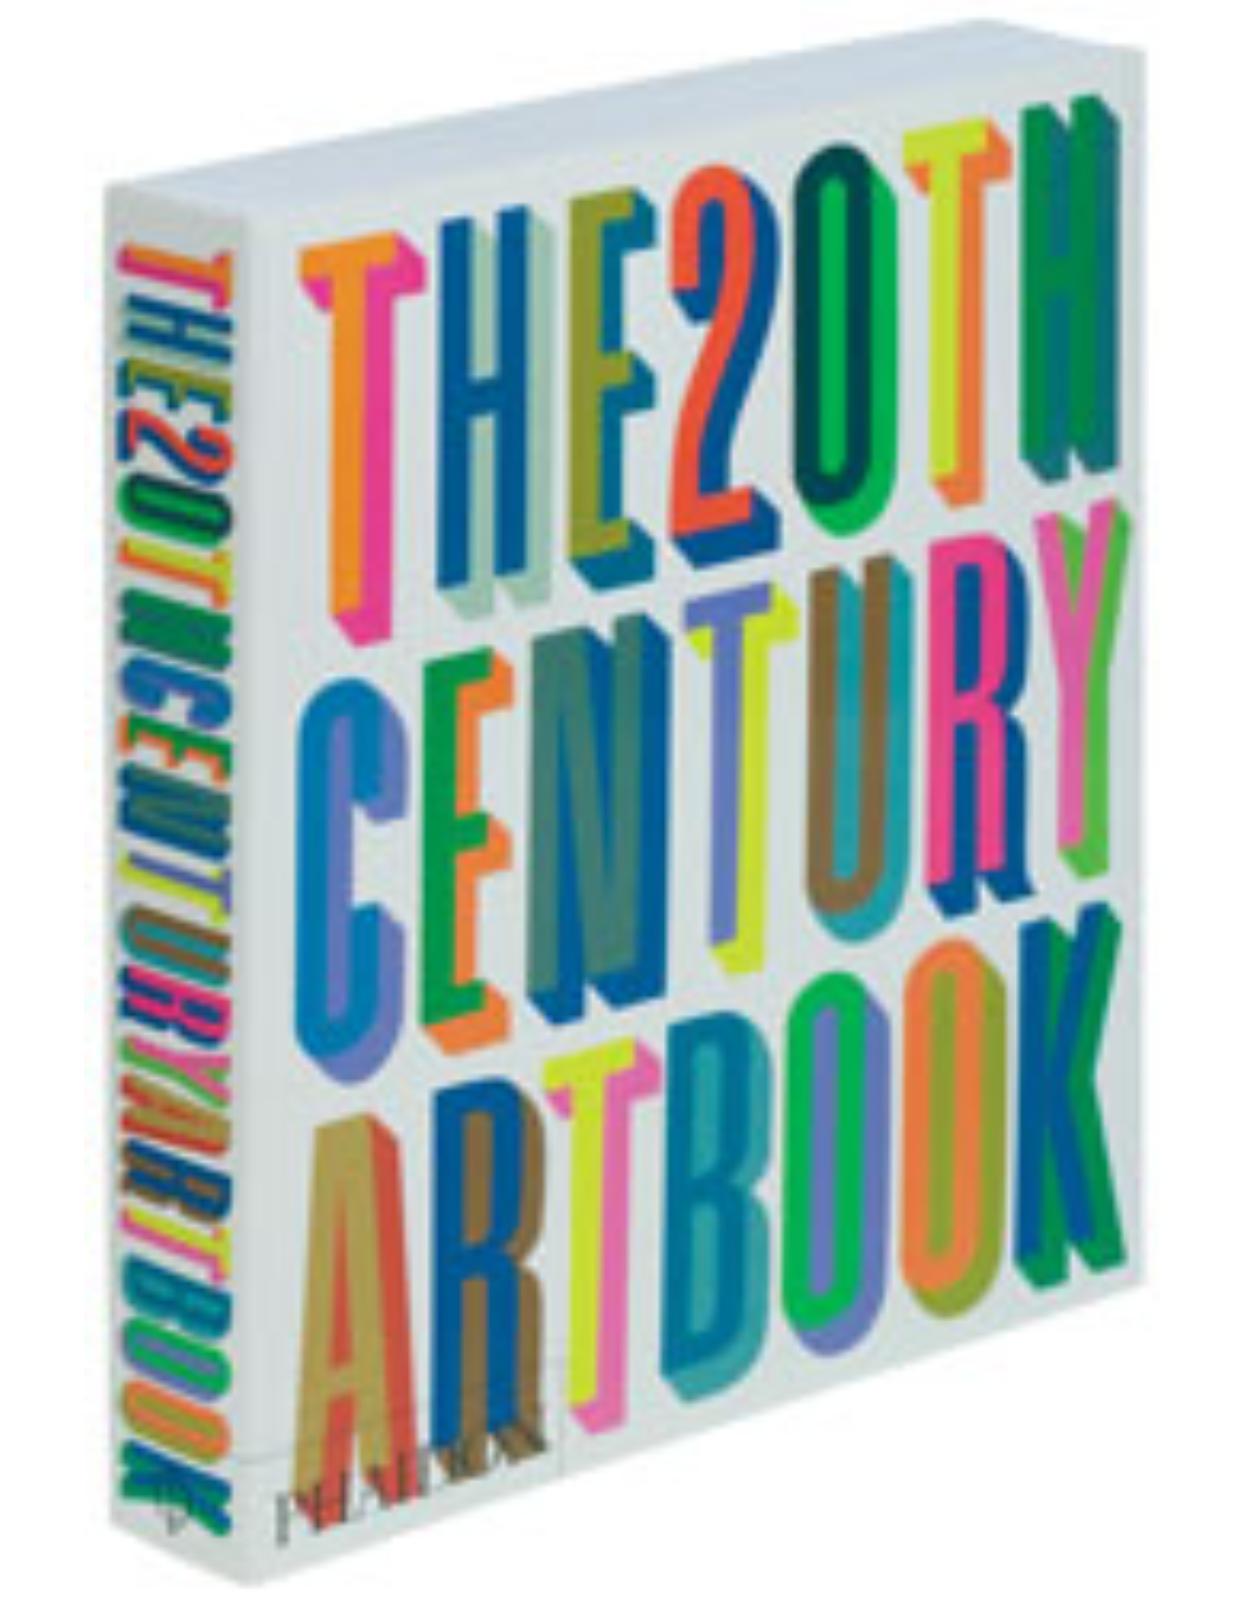 The 20th Century Art Book (midi format)